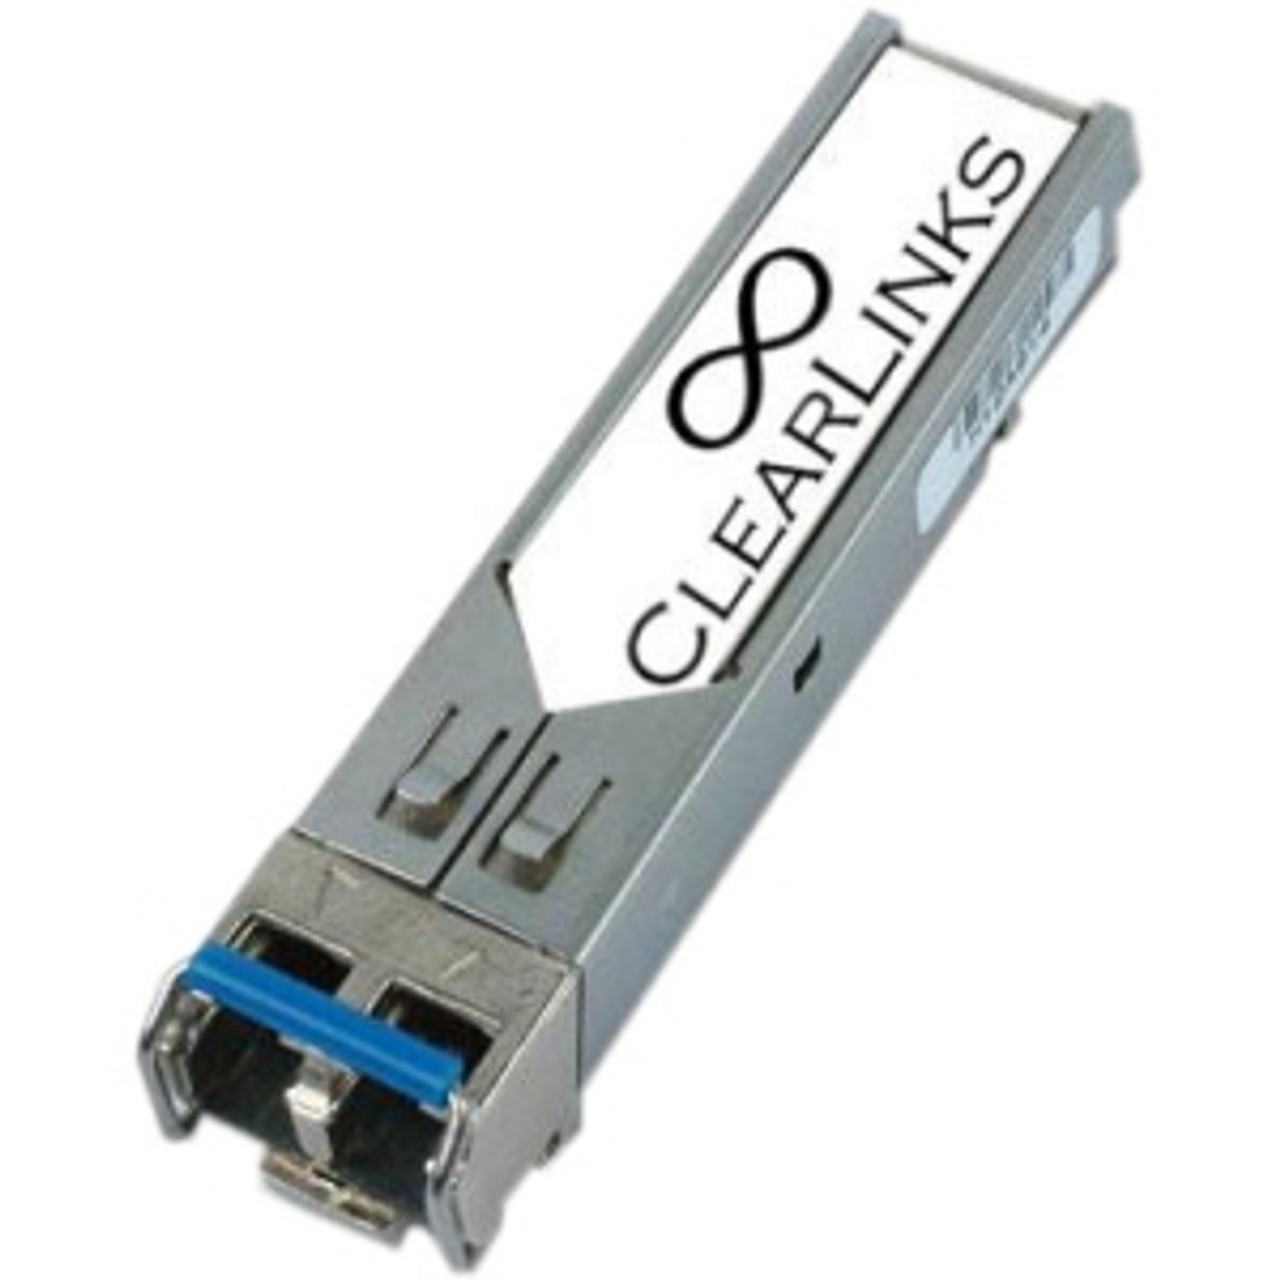 AGM732F-CL ClearLinks 1.25Gbps 1000Base-LX Single-mode Fiber 10km 1310nm Duplex LC Connector SFP (mini-GBIC) Transceiver Module